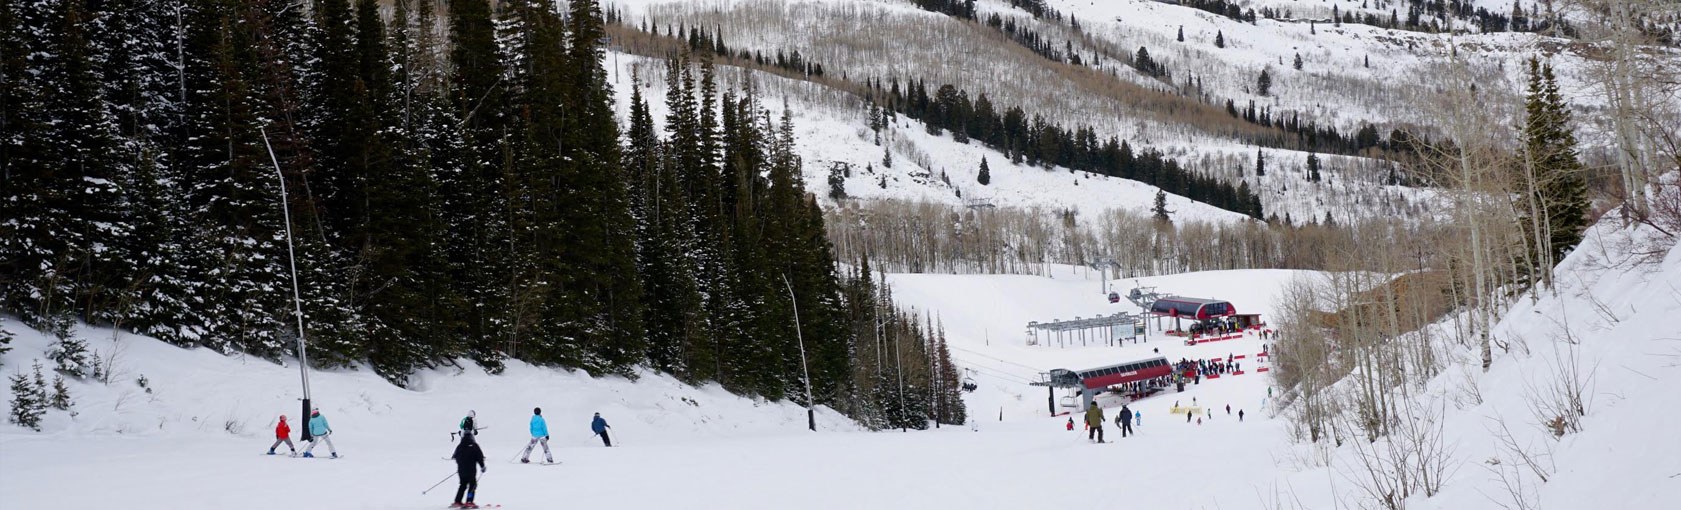 Park City Utah ski slopes